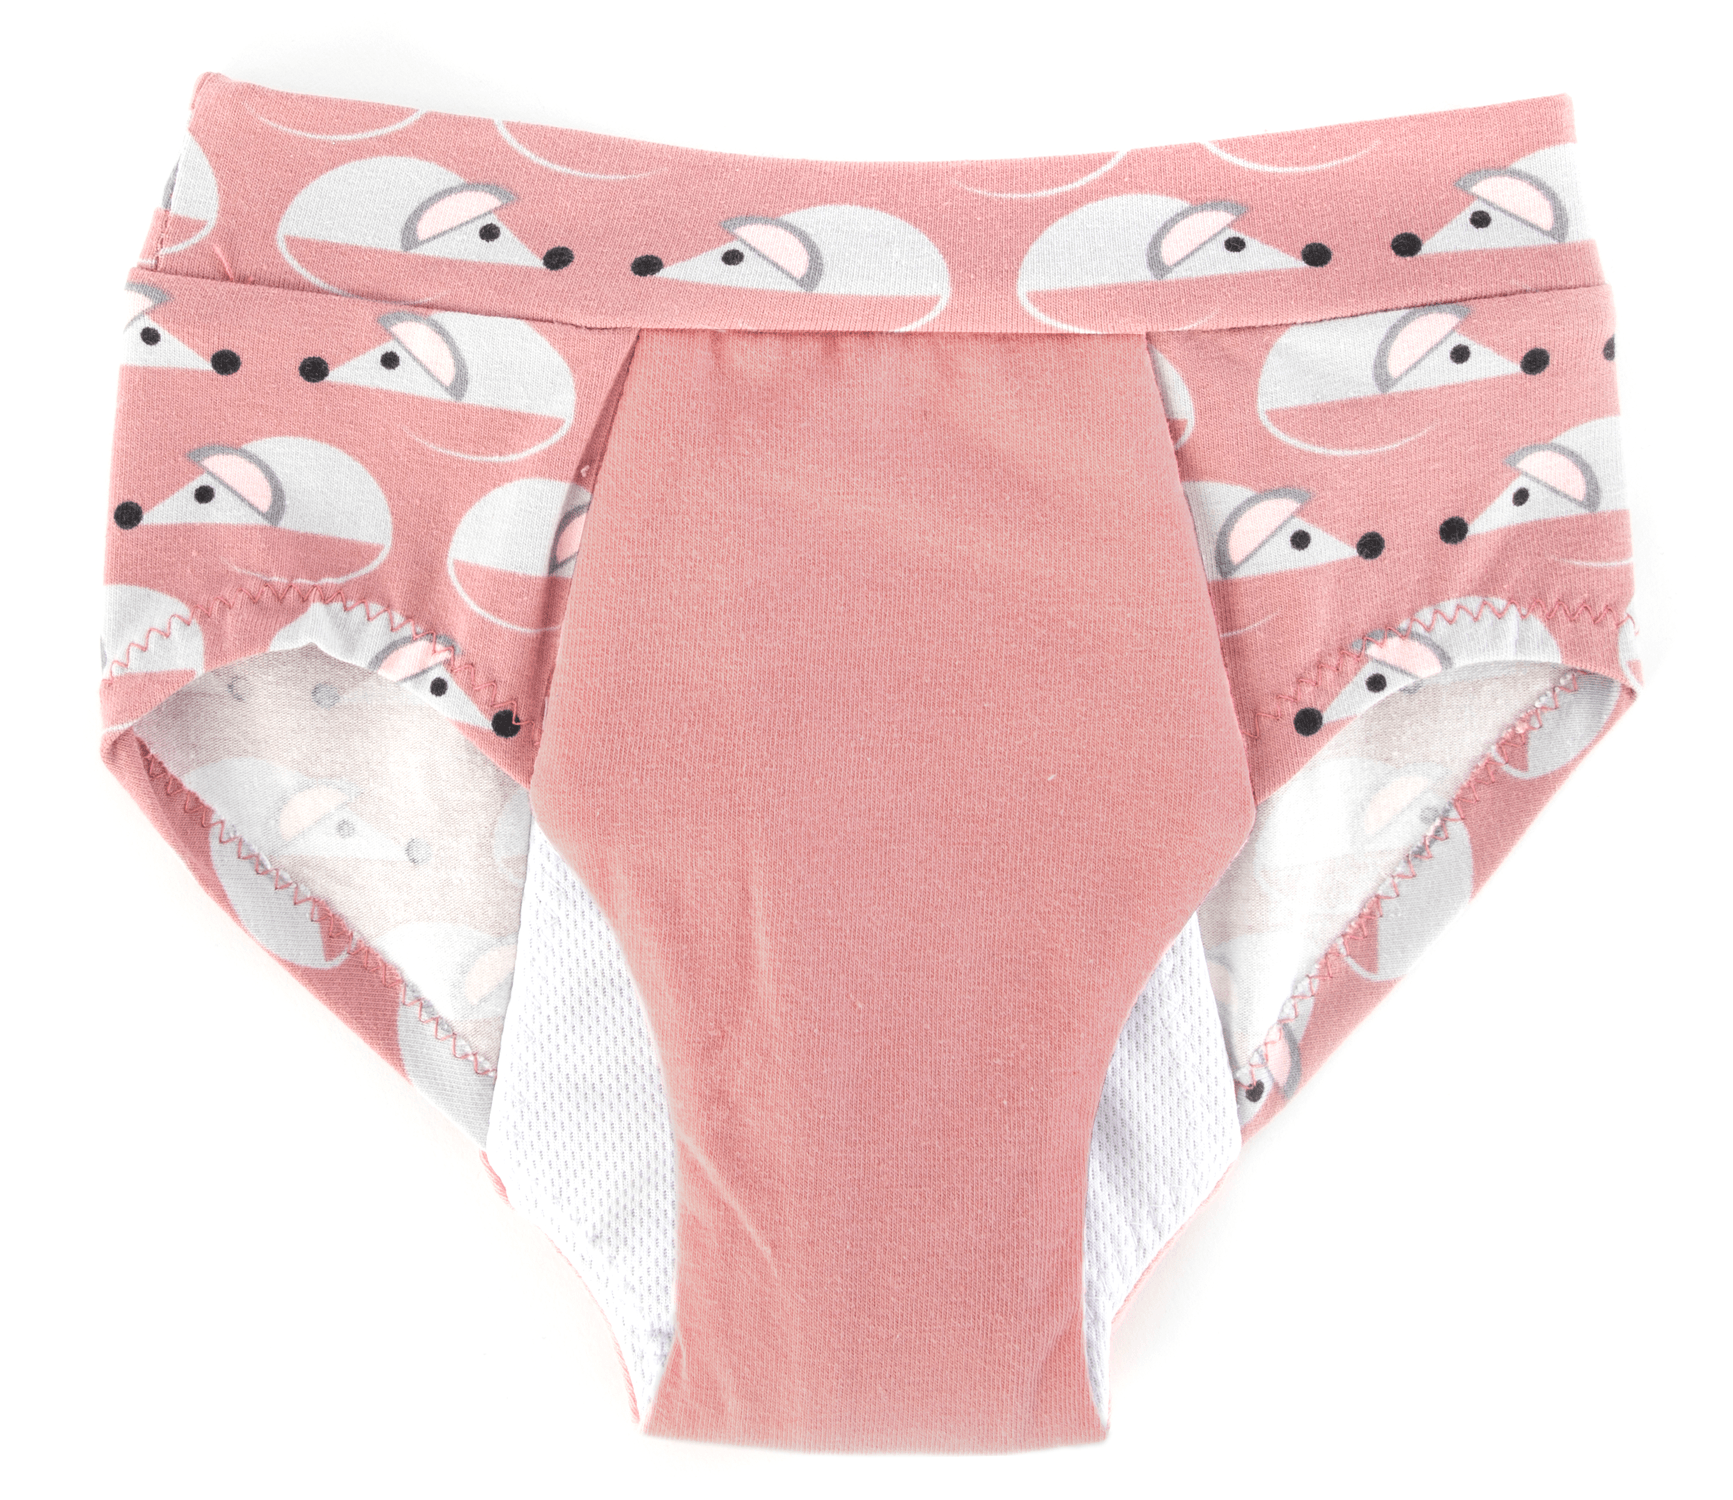 How to Make Reusable Period Underwear - Spoonflower Blog